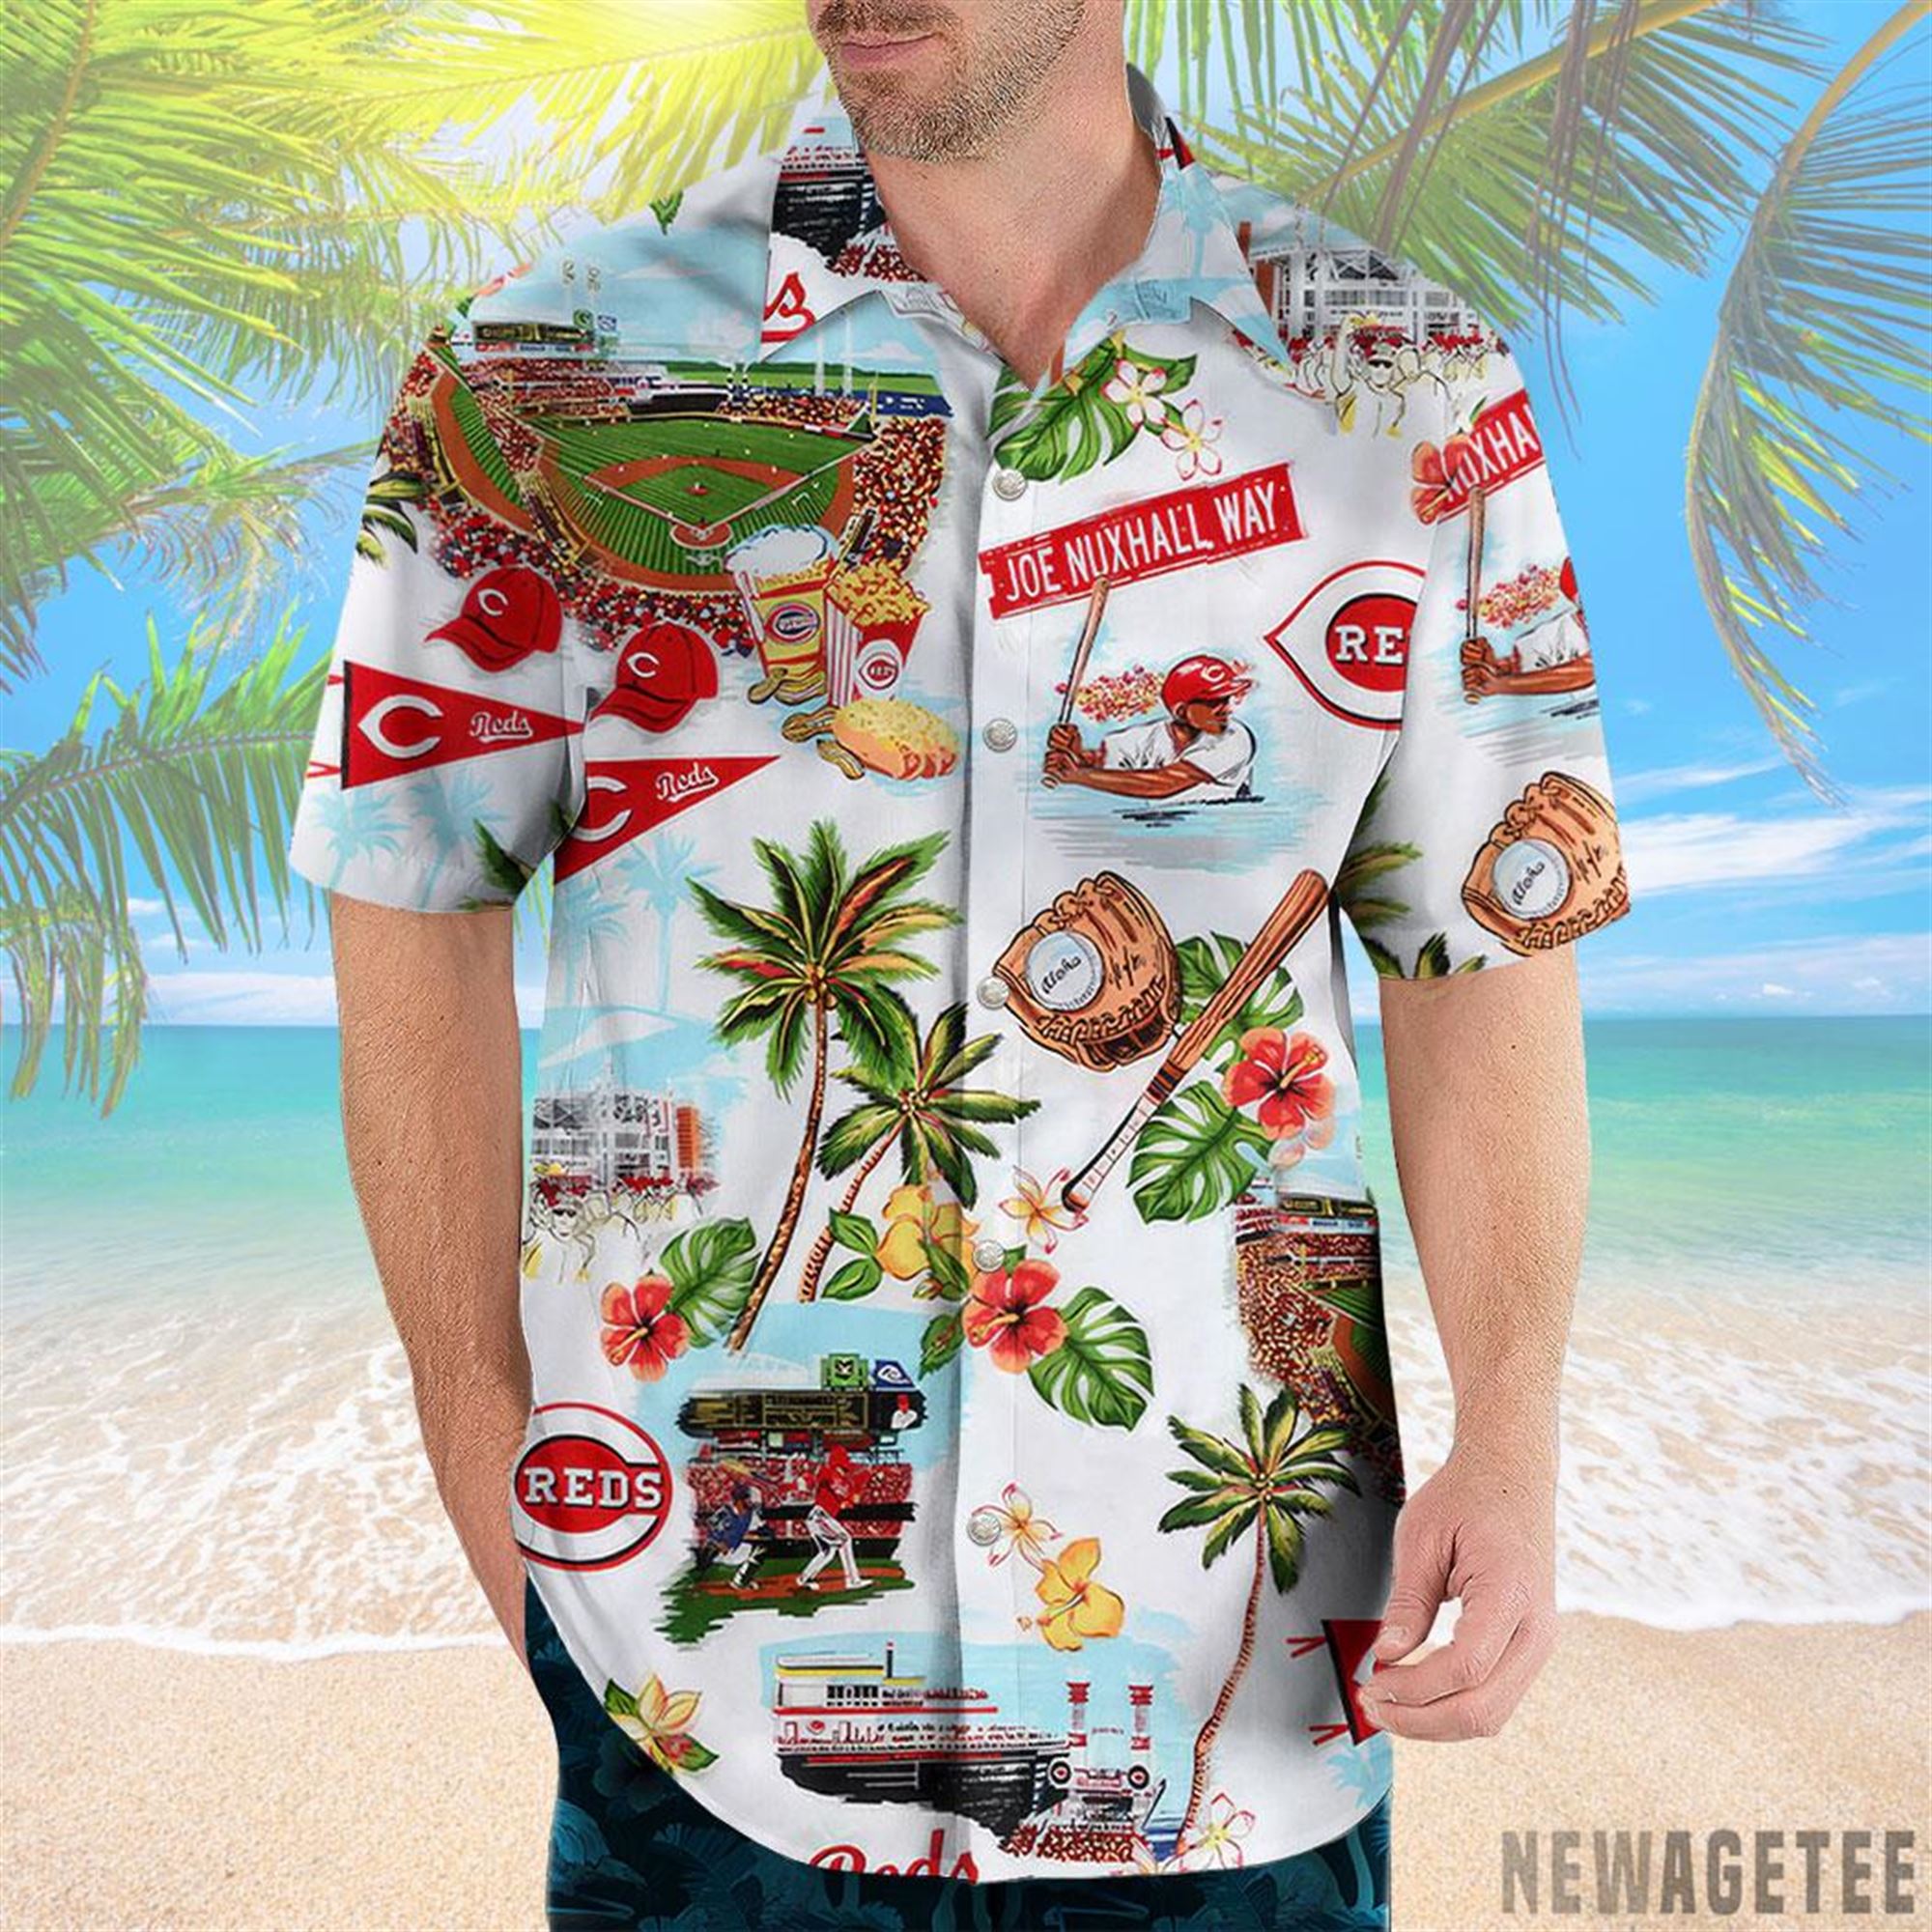 Cincinnati Reds MLB Trending Hawaiian Shirt And Shorts For Fans